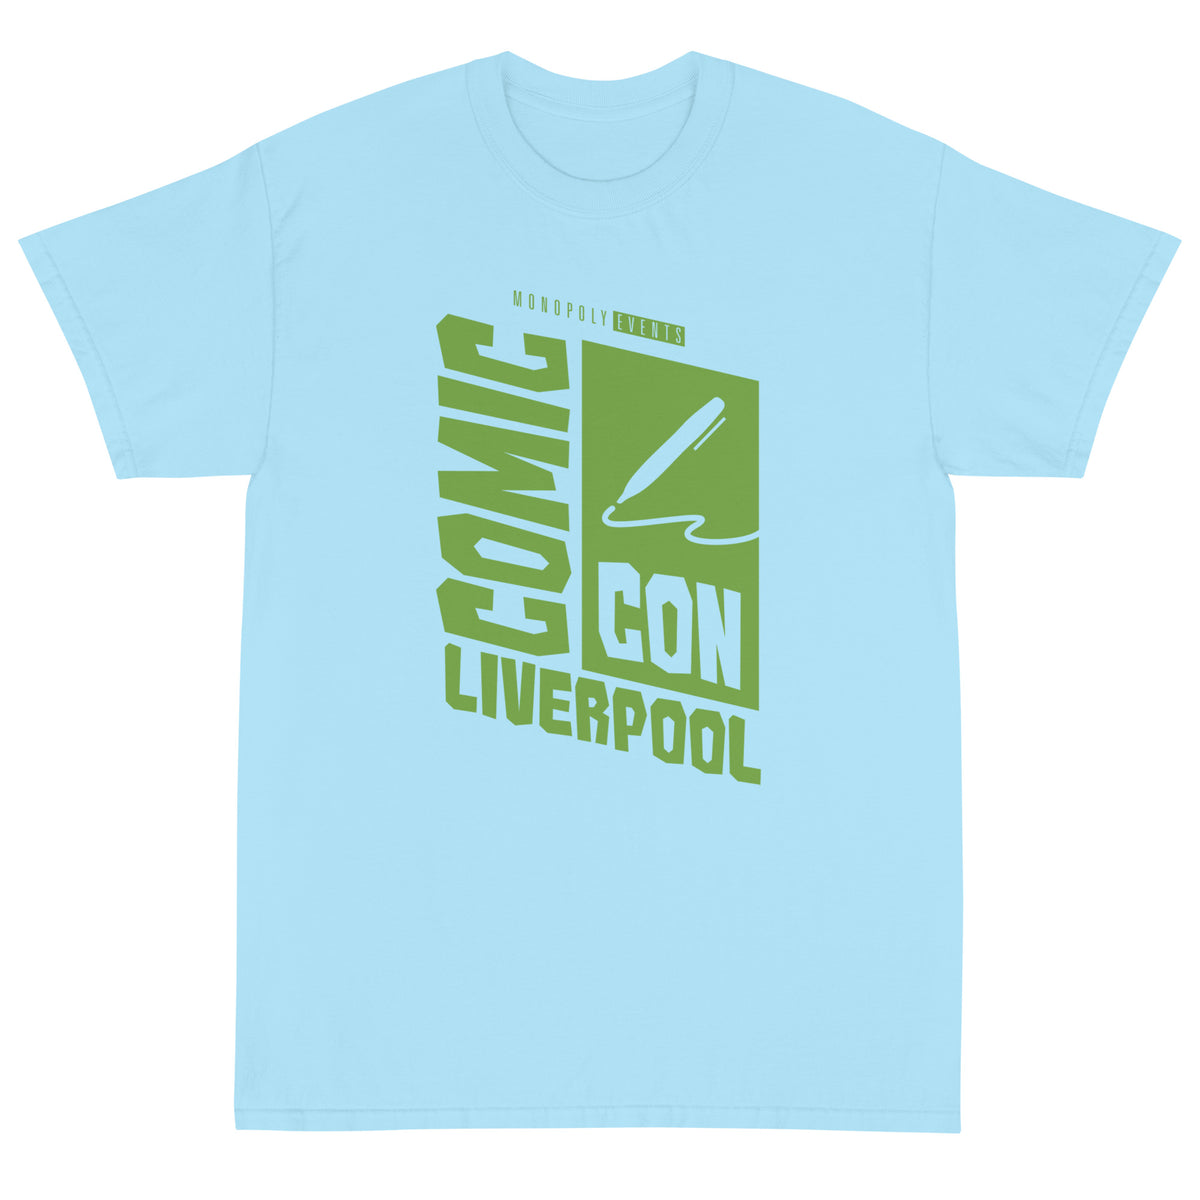 Liverpool Comic Con Logo Short Sleeve T-Shirt